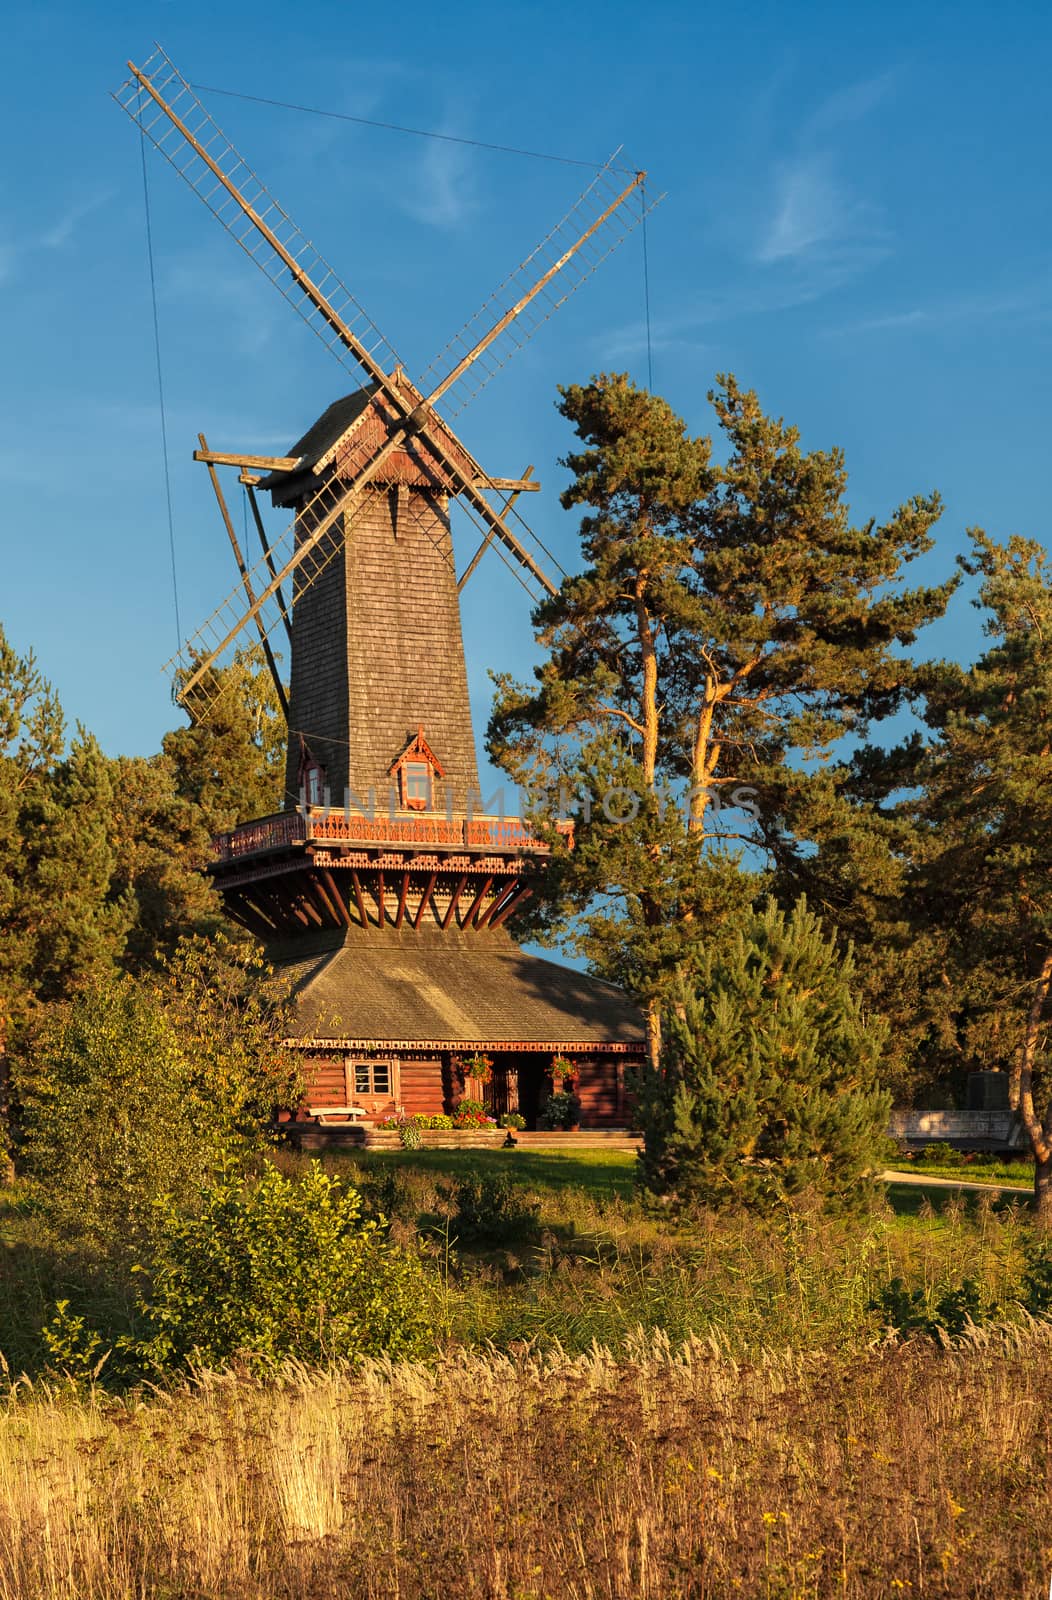 The Natascha, a Ukrainian windmill